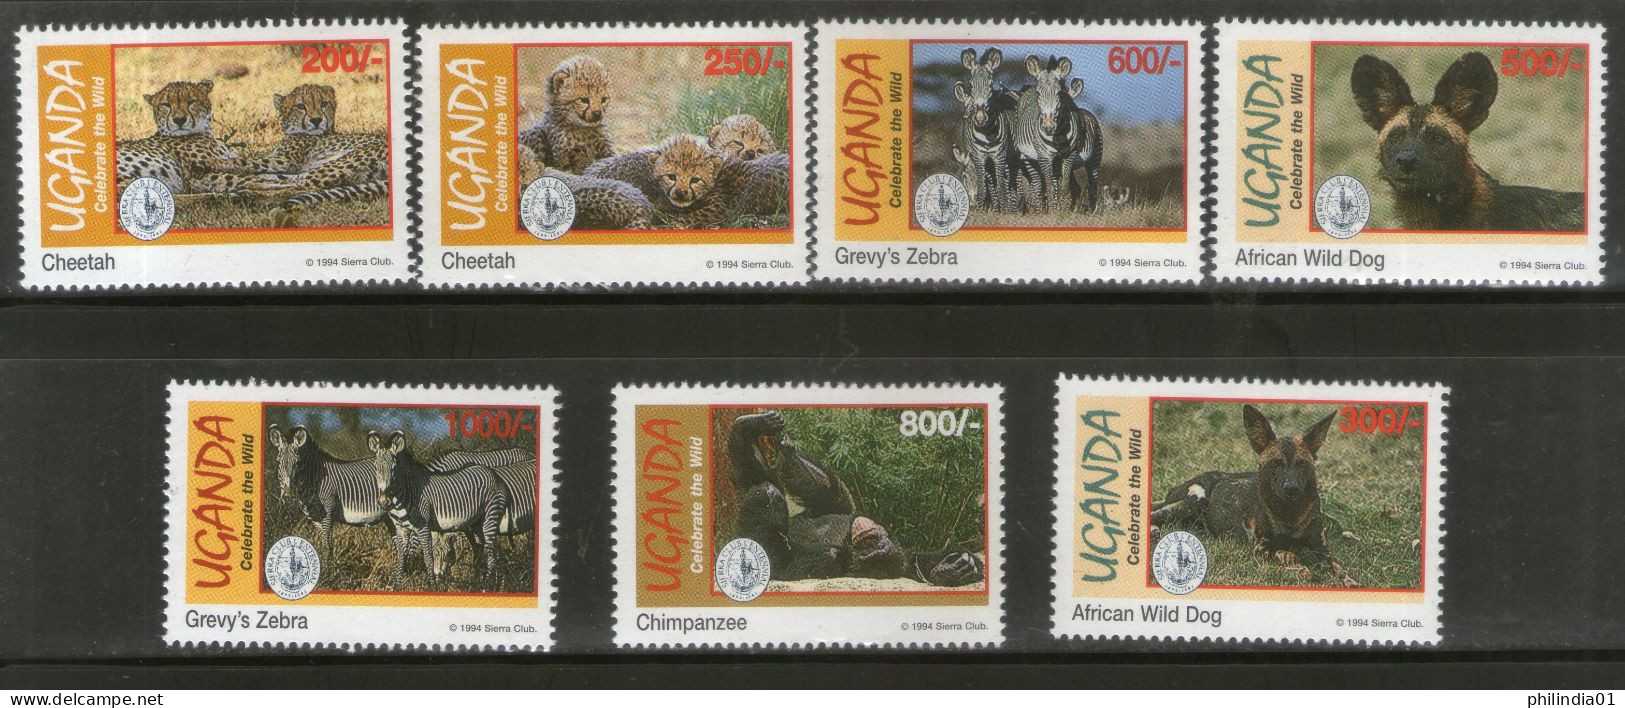 Uganda 1994 Endangered Species Cheetah Dog Chimpanzee Zebra Sc 1272 7v MNH # 1 - Chimpanzees